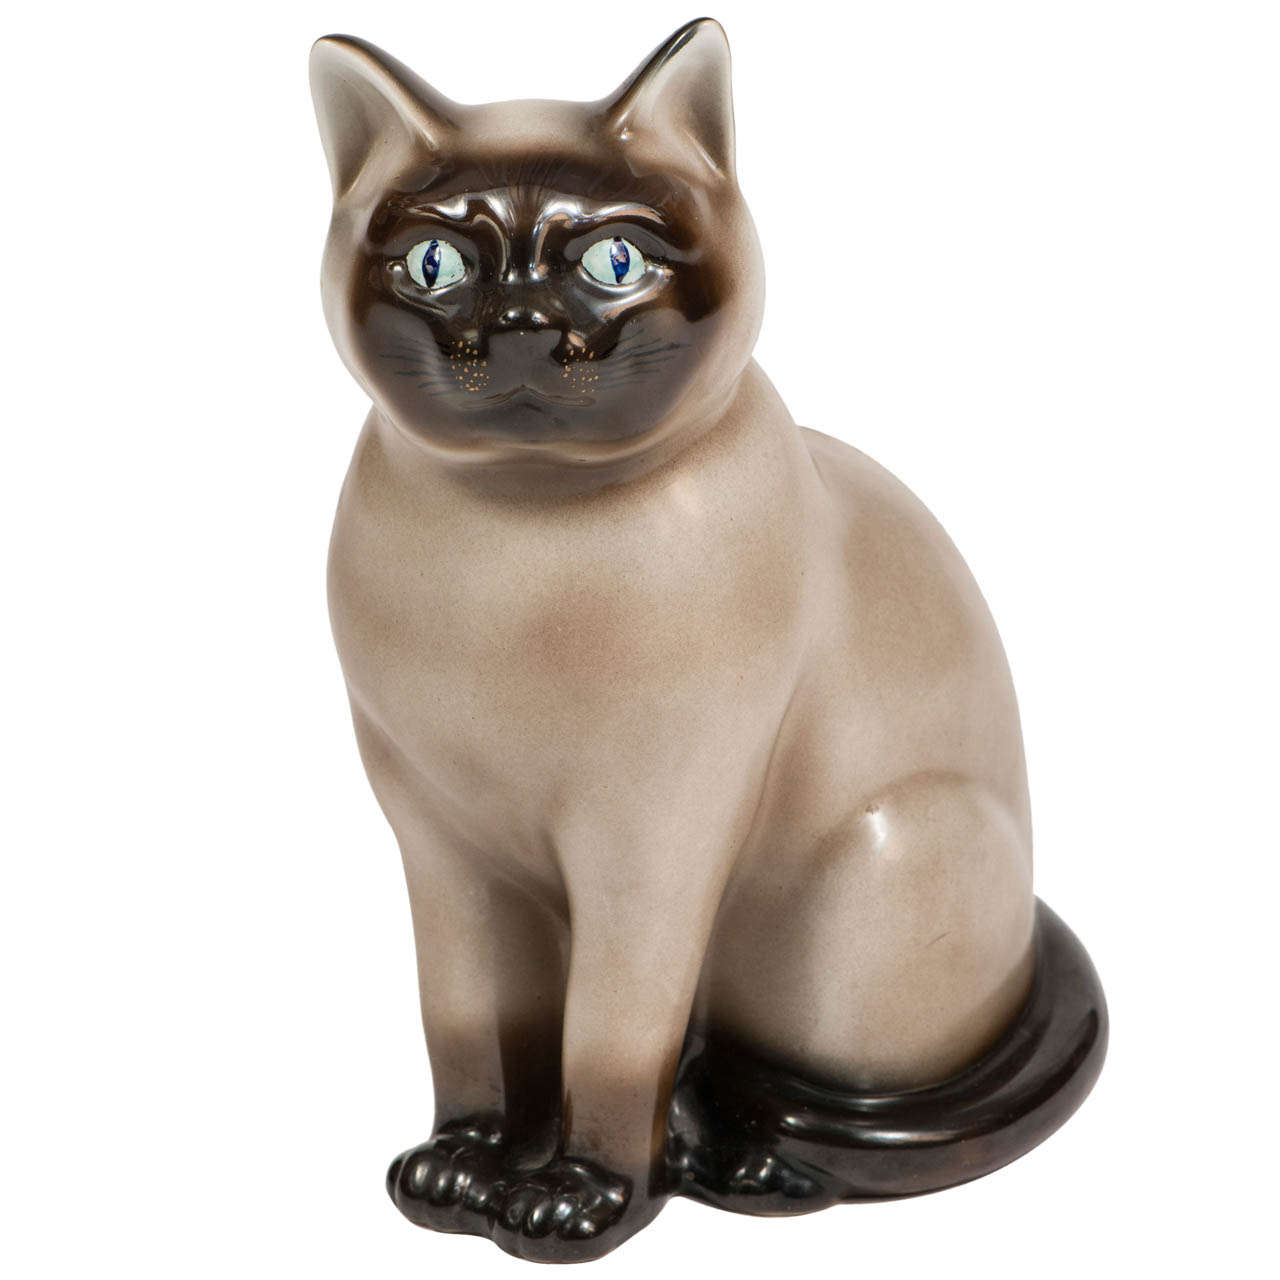 A Fornasetti Life-Size Ceramic Cat